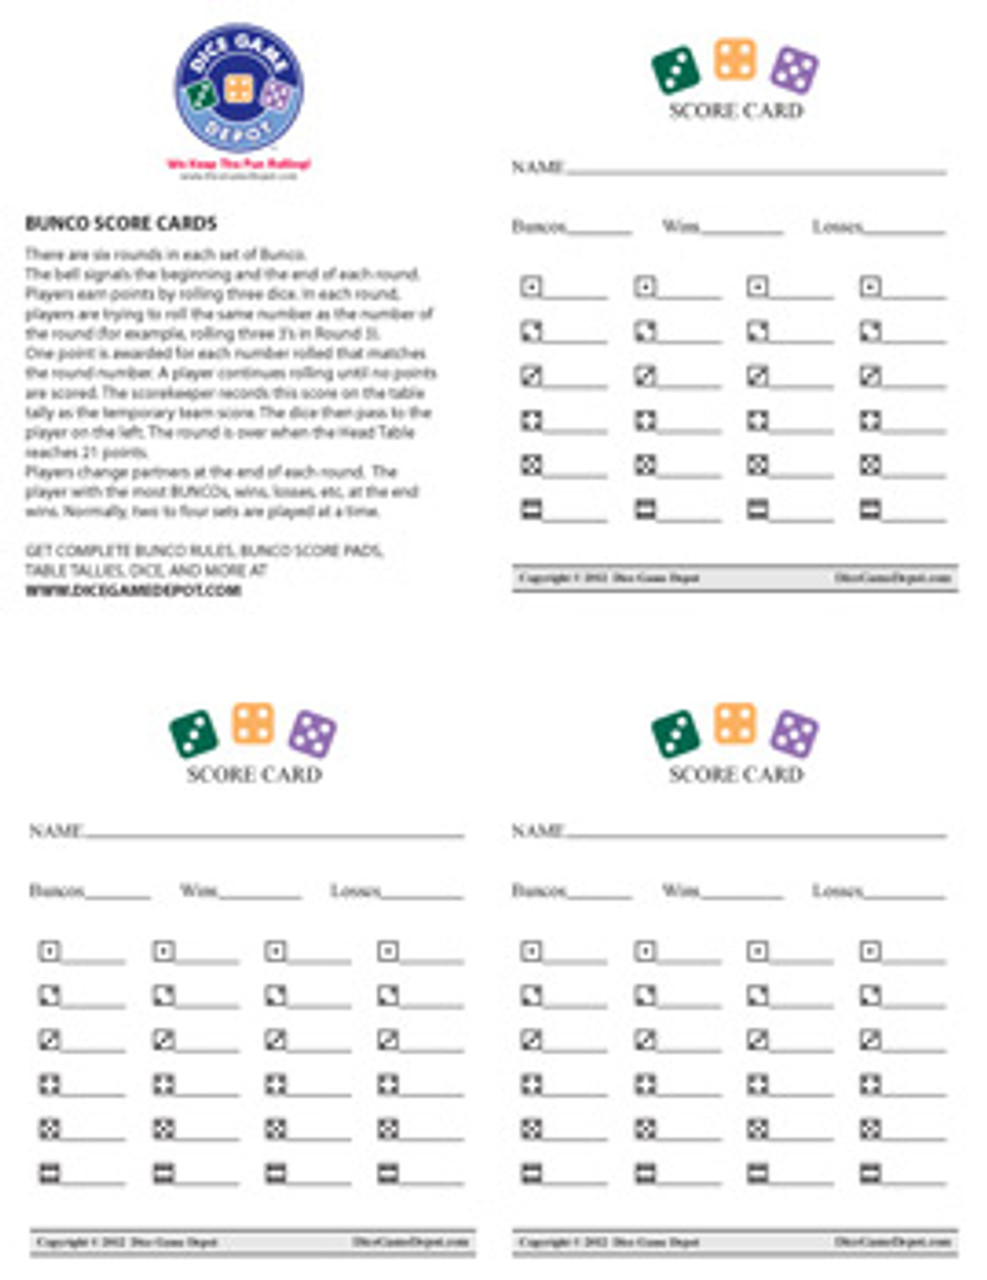 printable-template-bunco-score-sheets